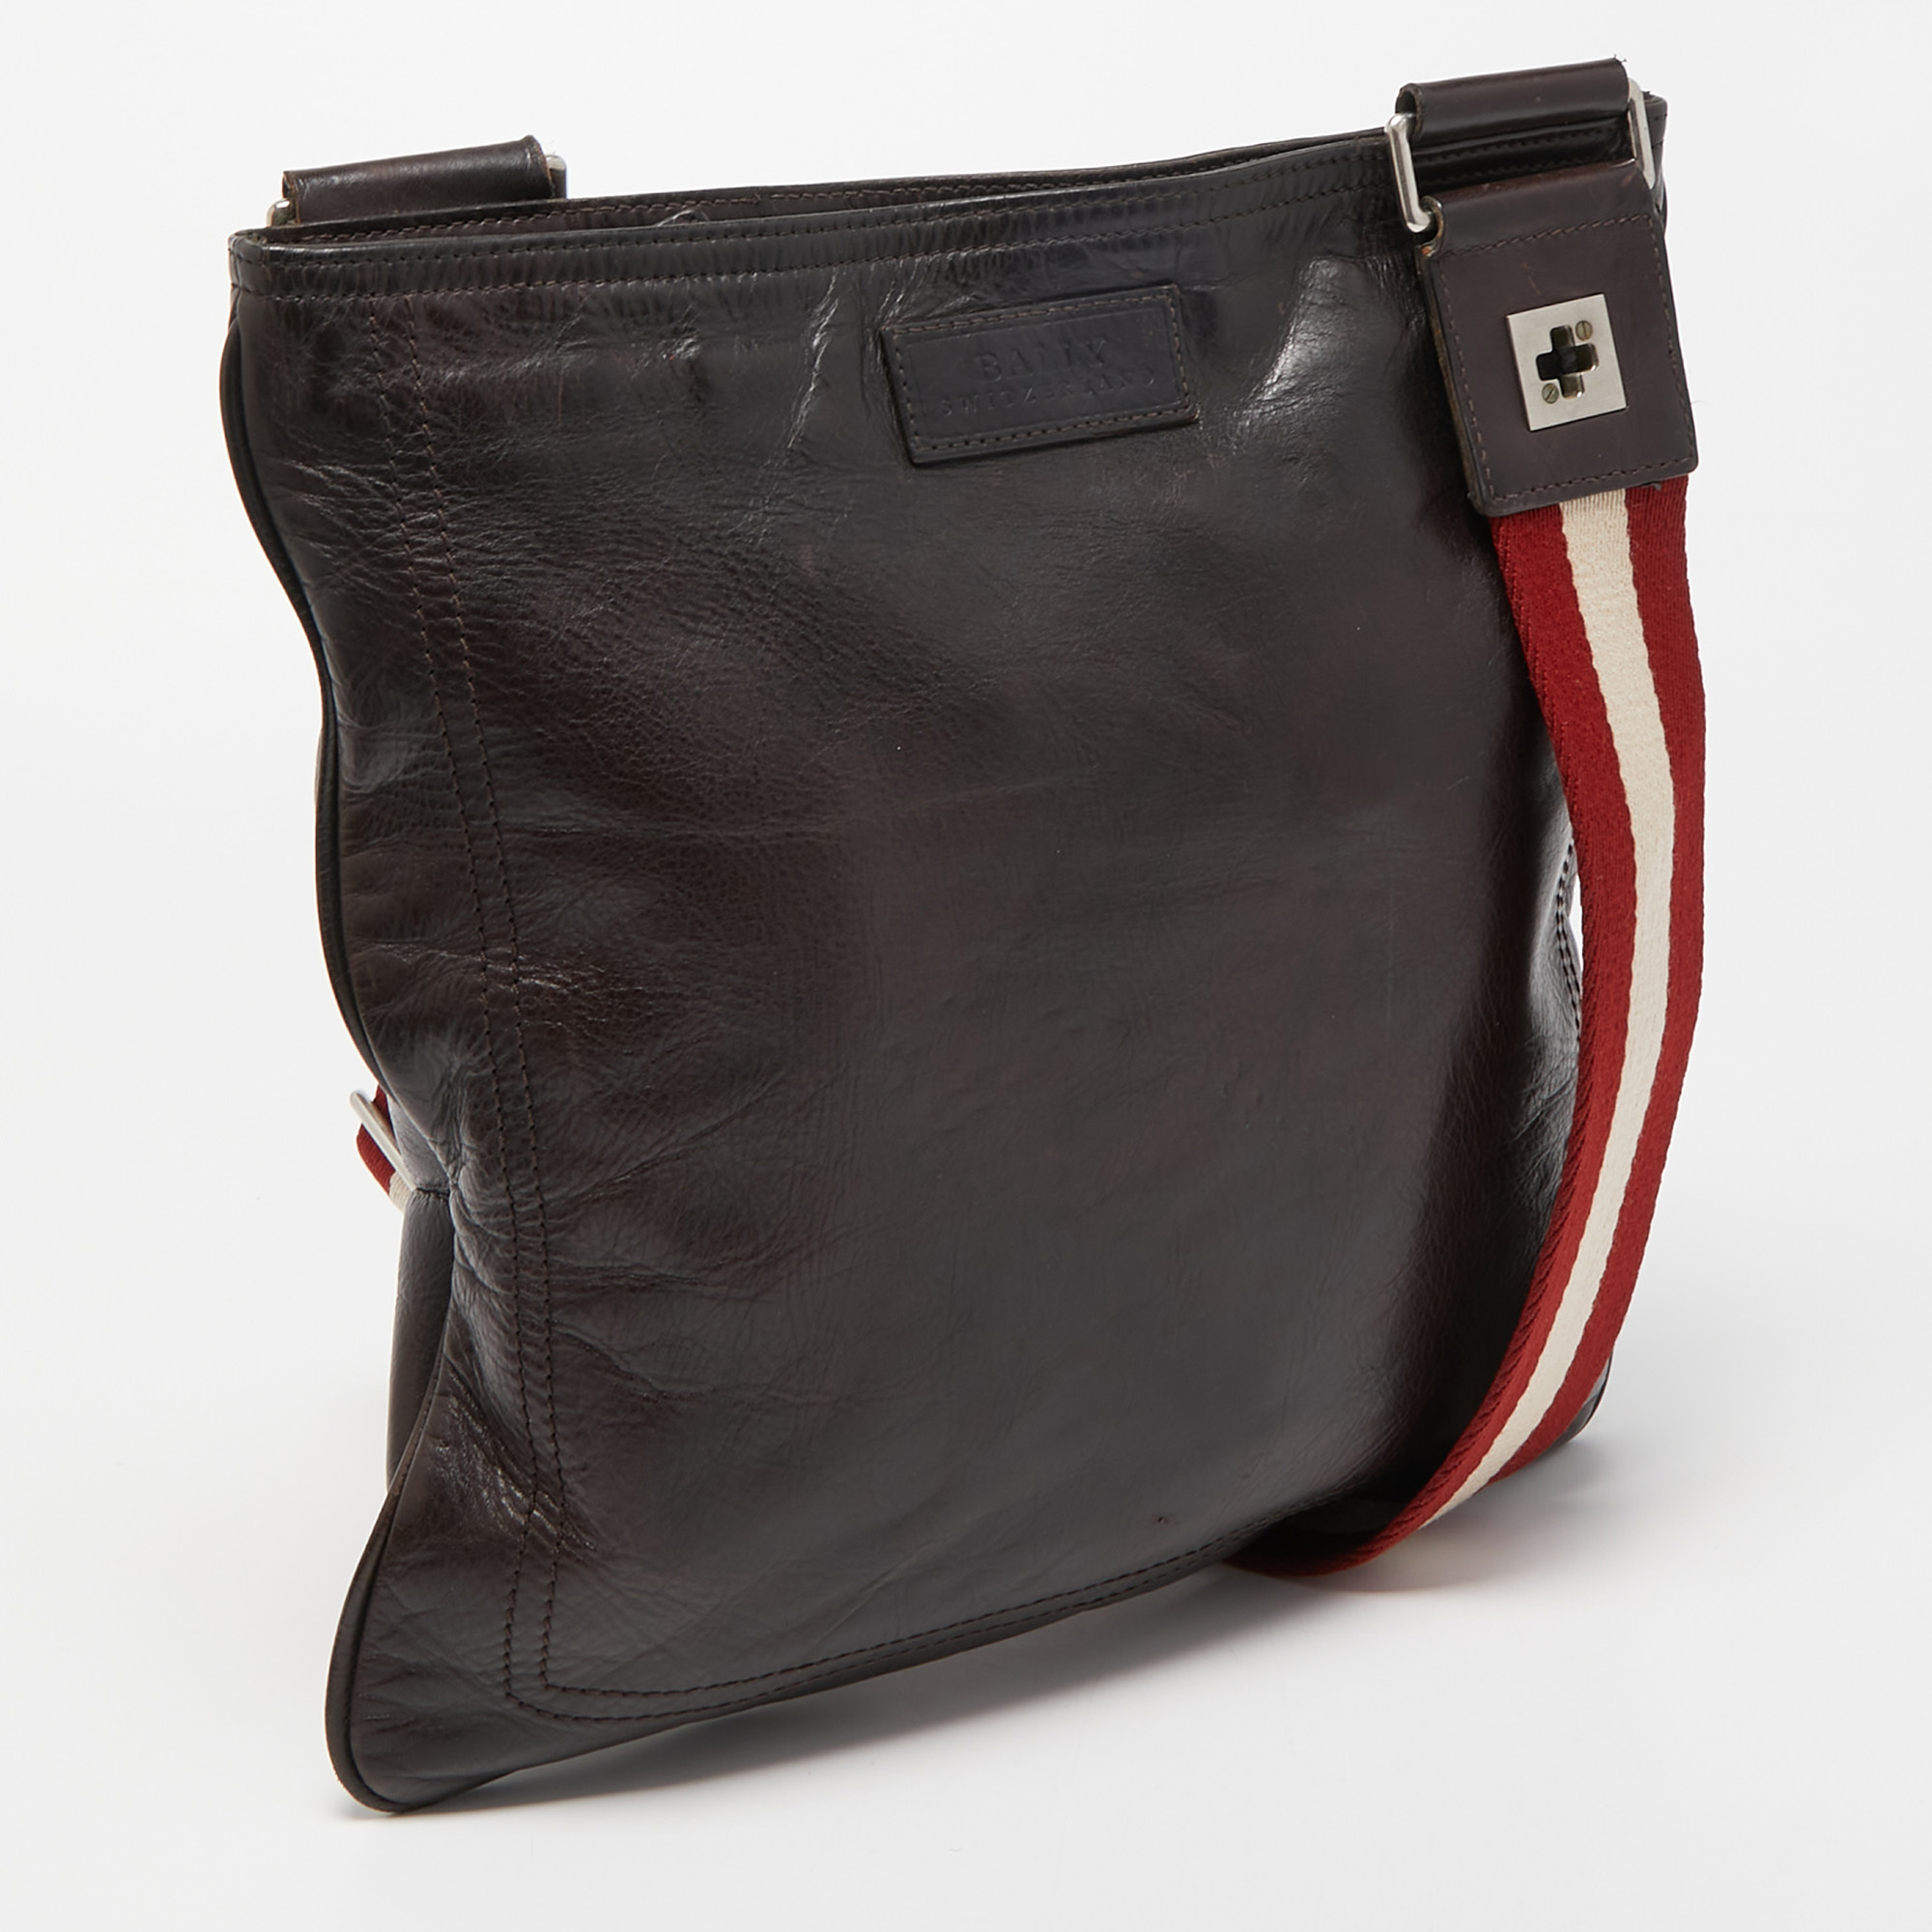 Bally Dark Brown Leather Flat Messenger Bag